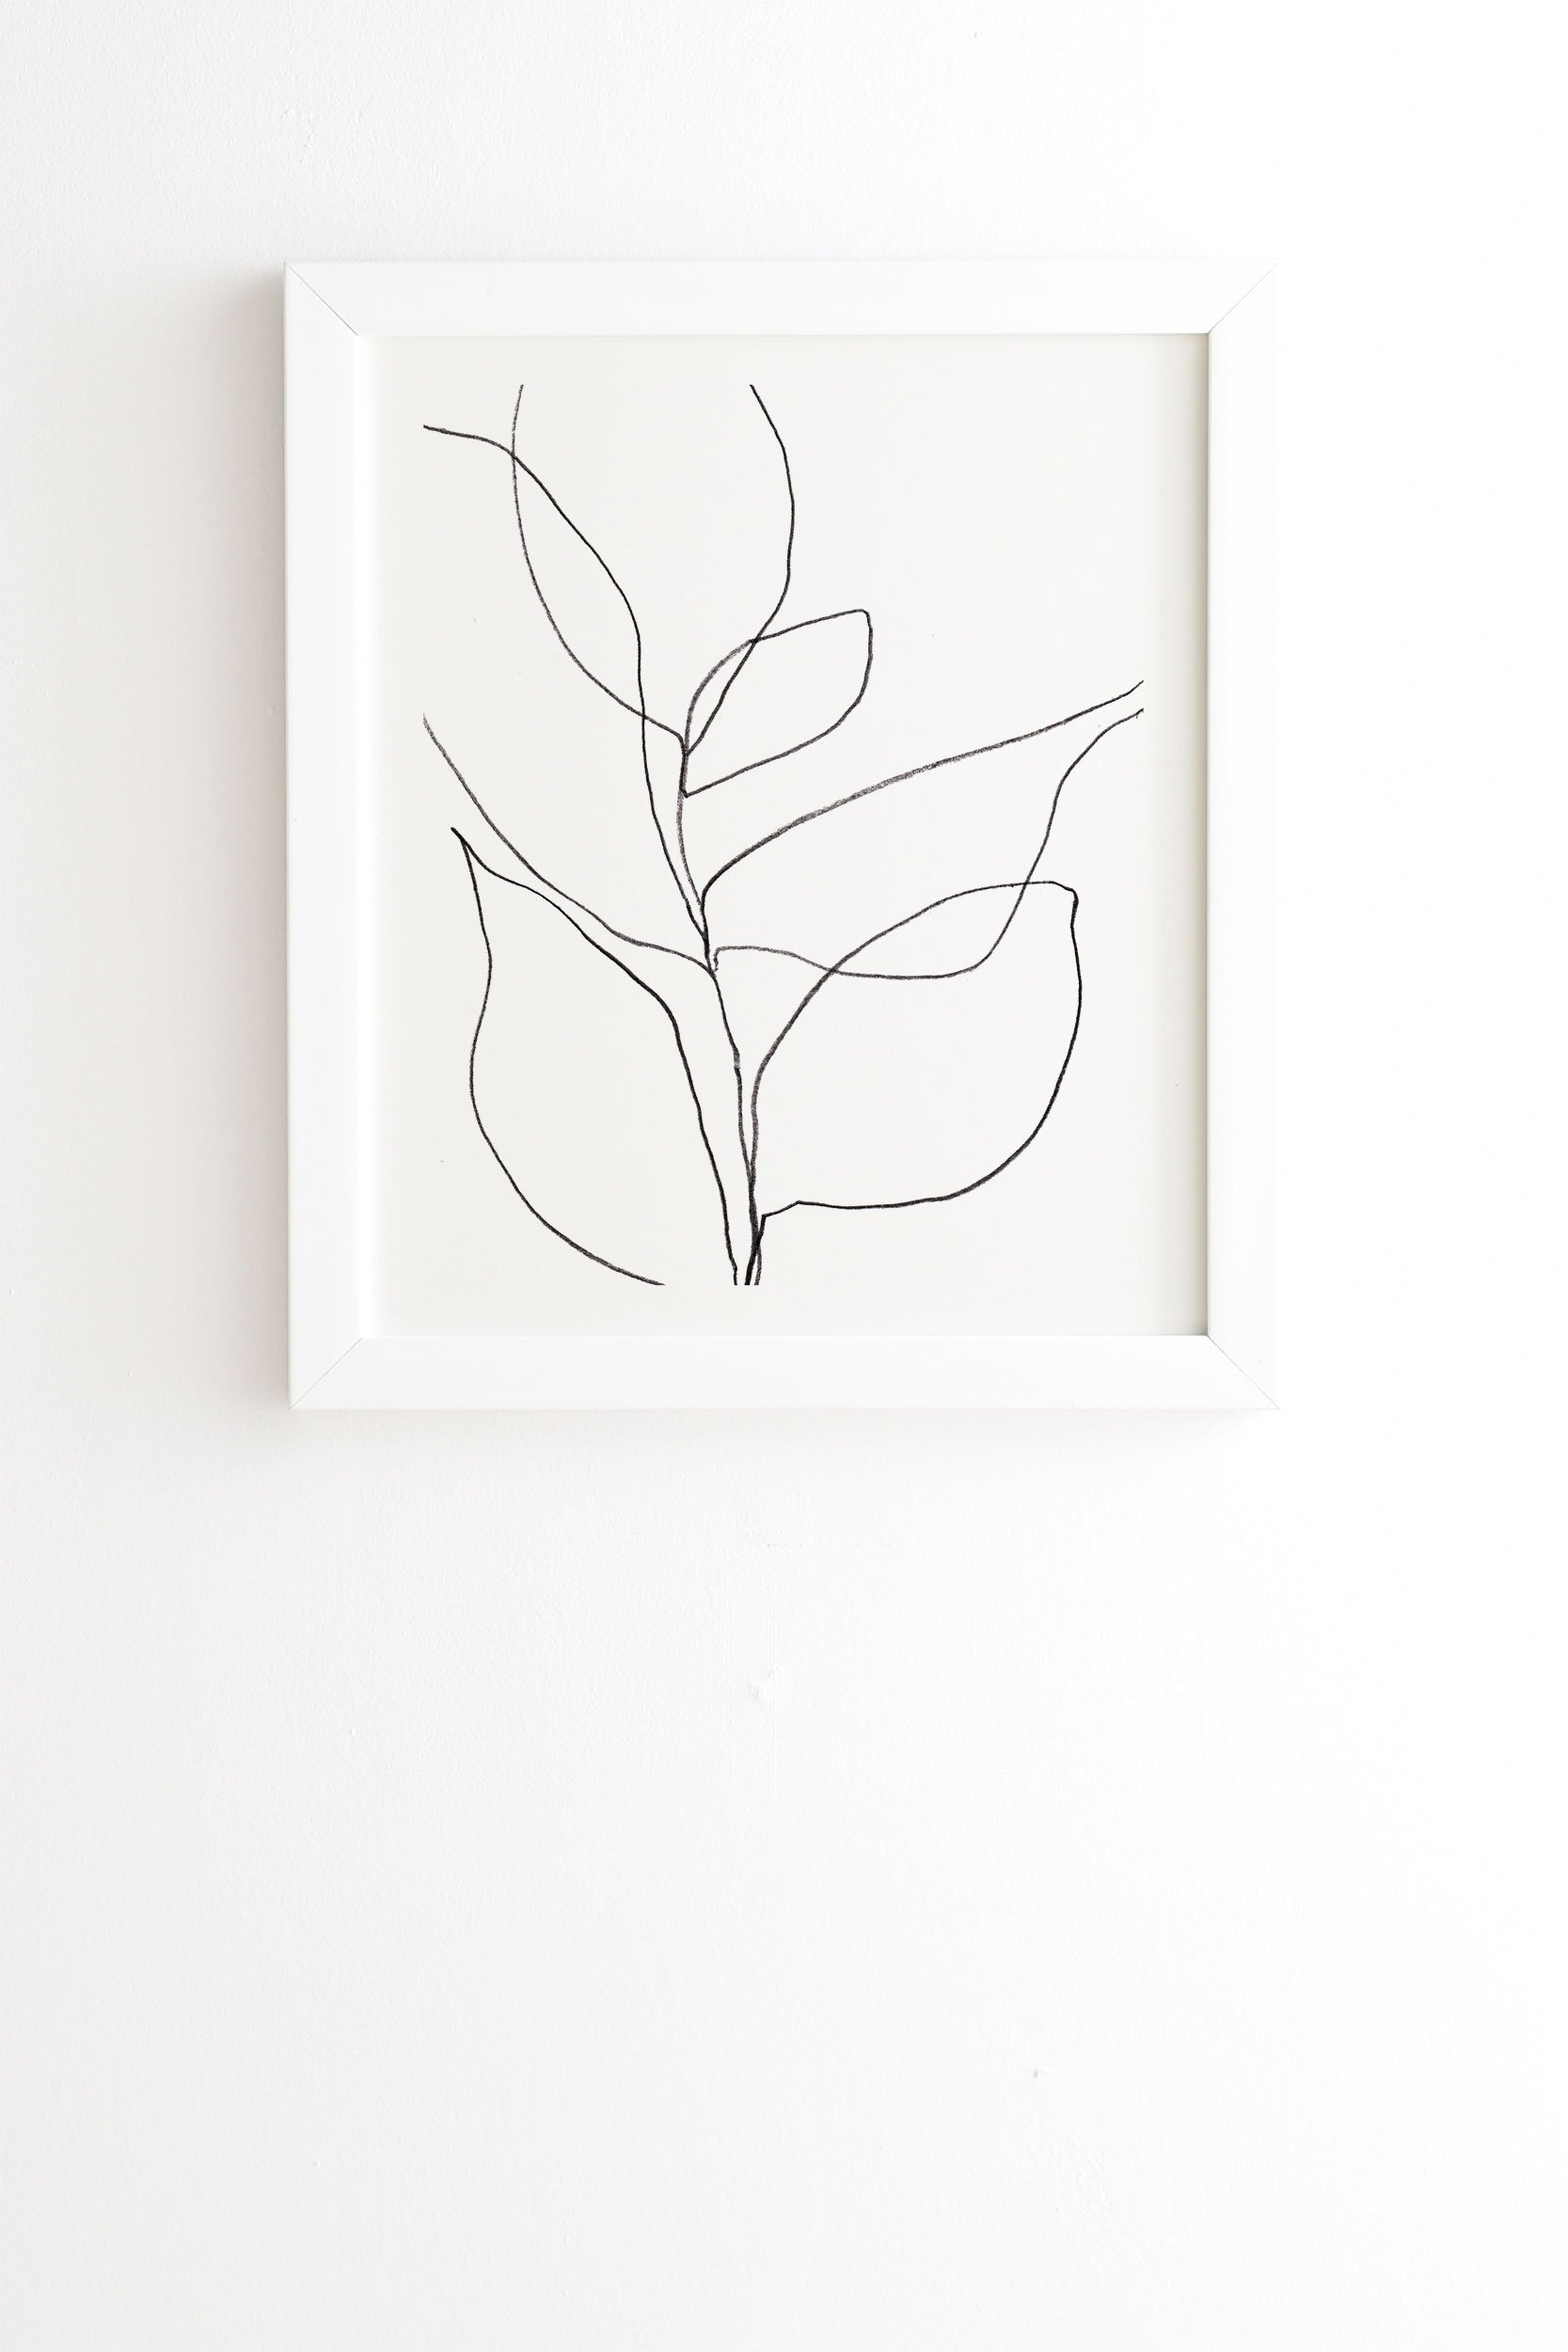 Minimalist Line Art Plant Drawing by GalleryJ9, White Frame, 19" x 22.4" - Wander Print Co.